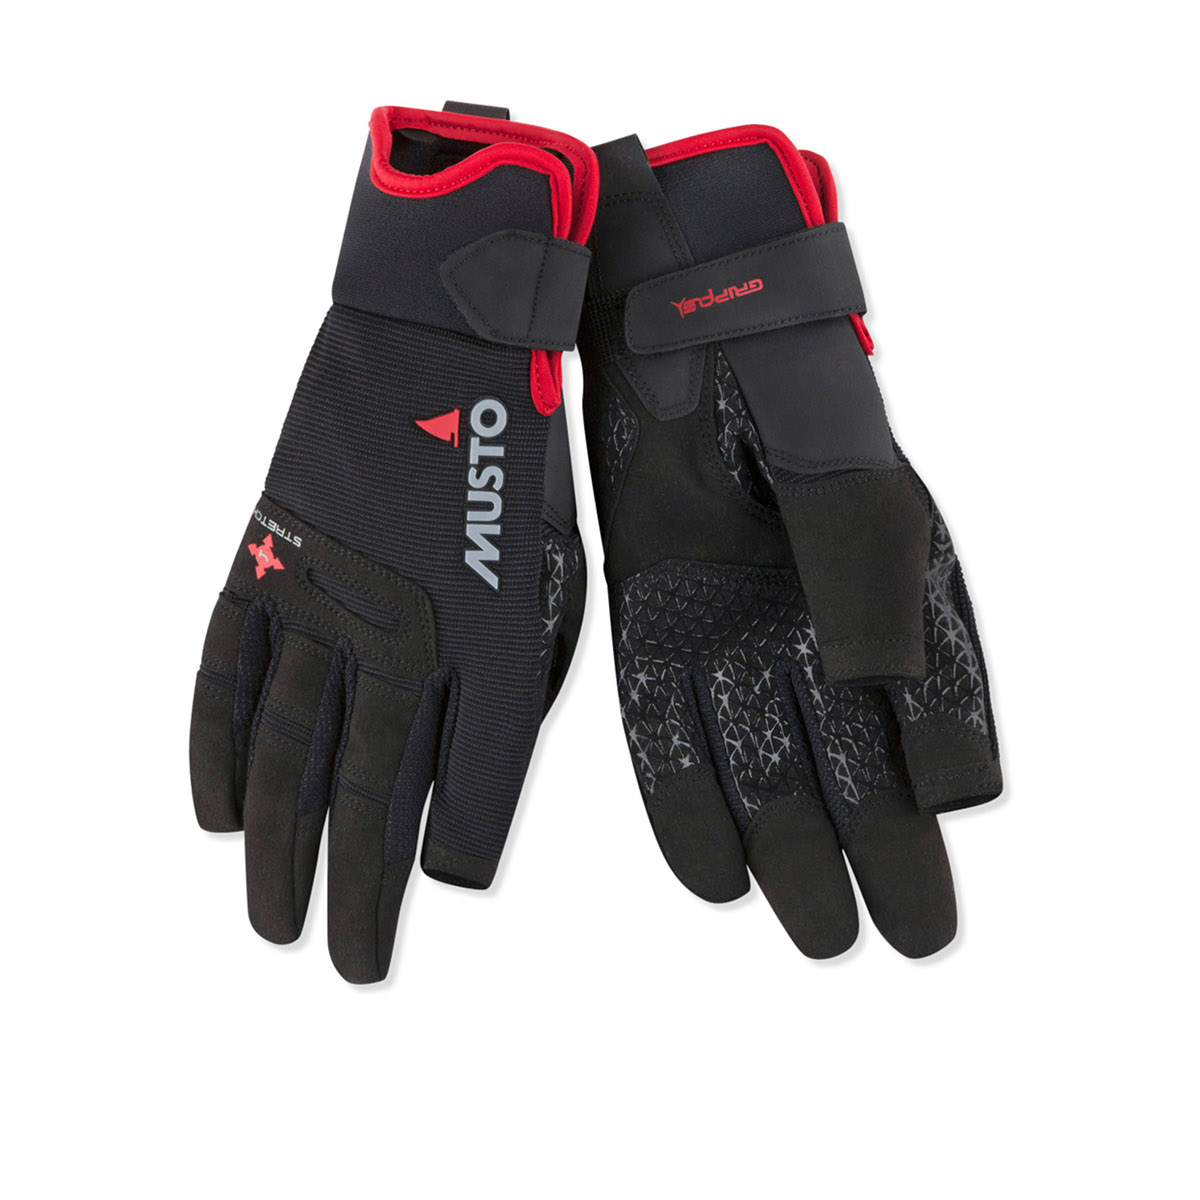 Musto Performance gants de voile longs doigts noirs, taille XS